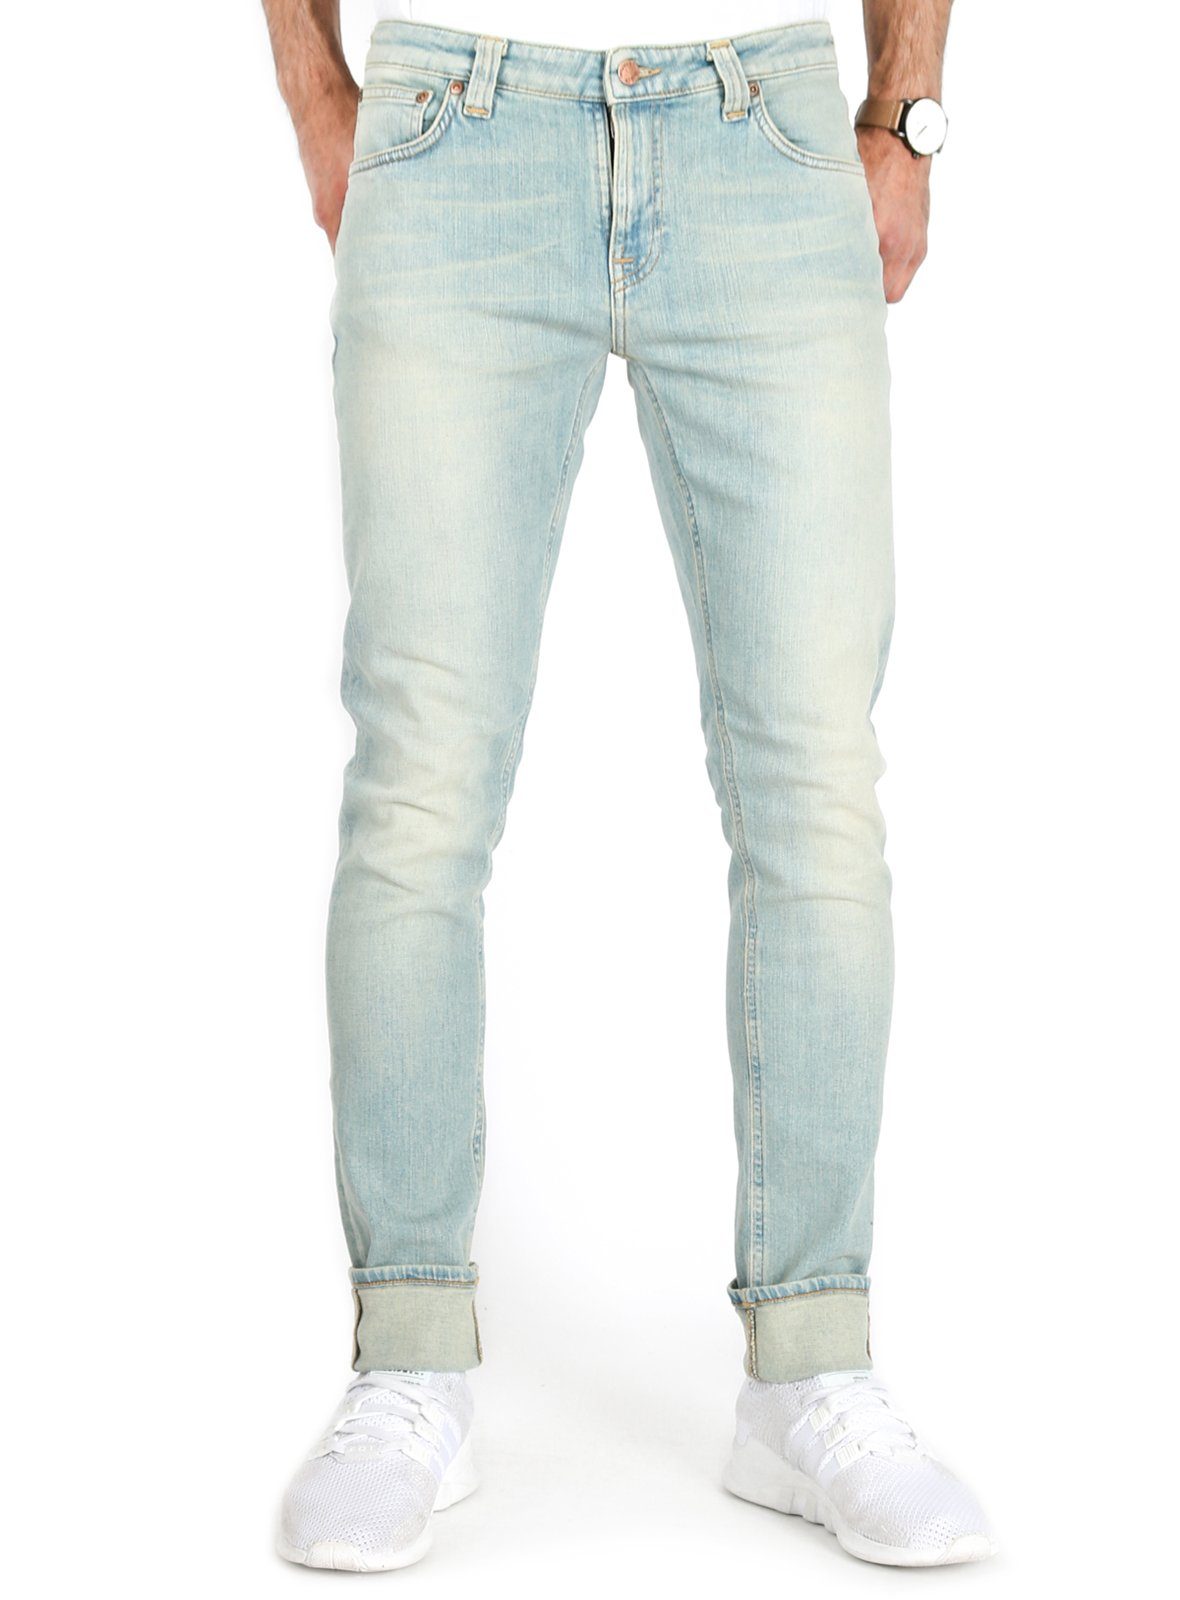 Nudie Jeans Skinny-fit-Jeans Herren Stretch Hose Bio Baumwolle Skinny Lin  Sea Breeze online kaufen | OTTO